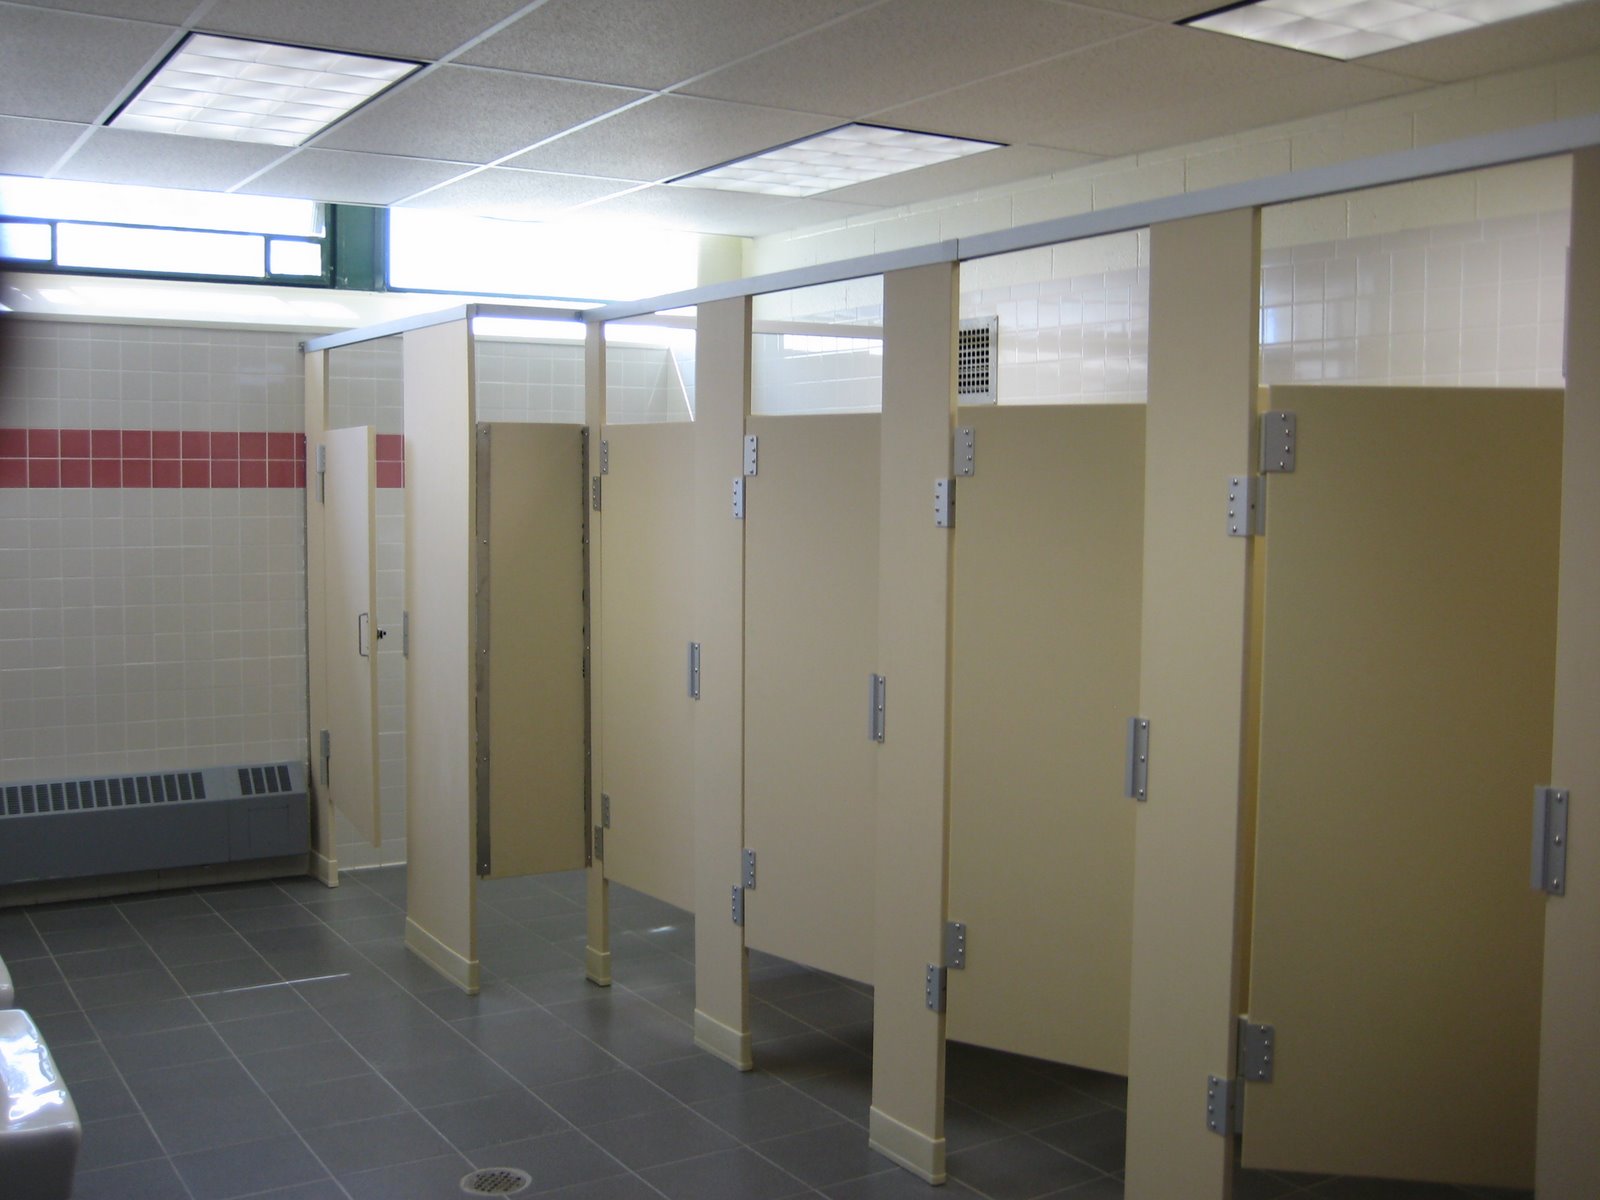 Related  Elementary School Bathroom  High School Bathroom  School